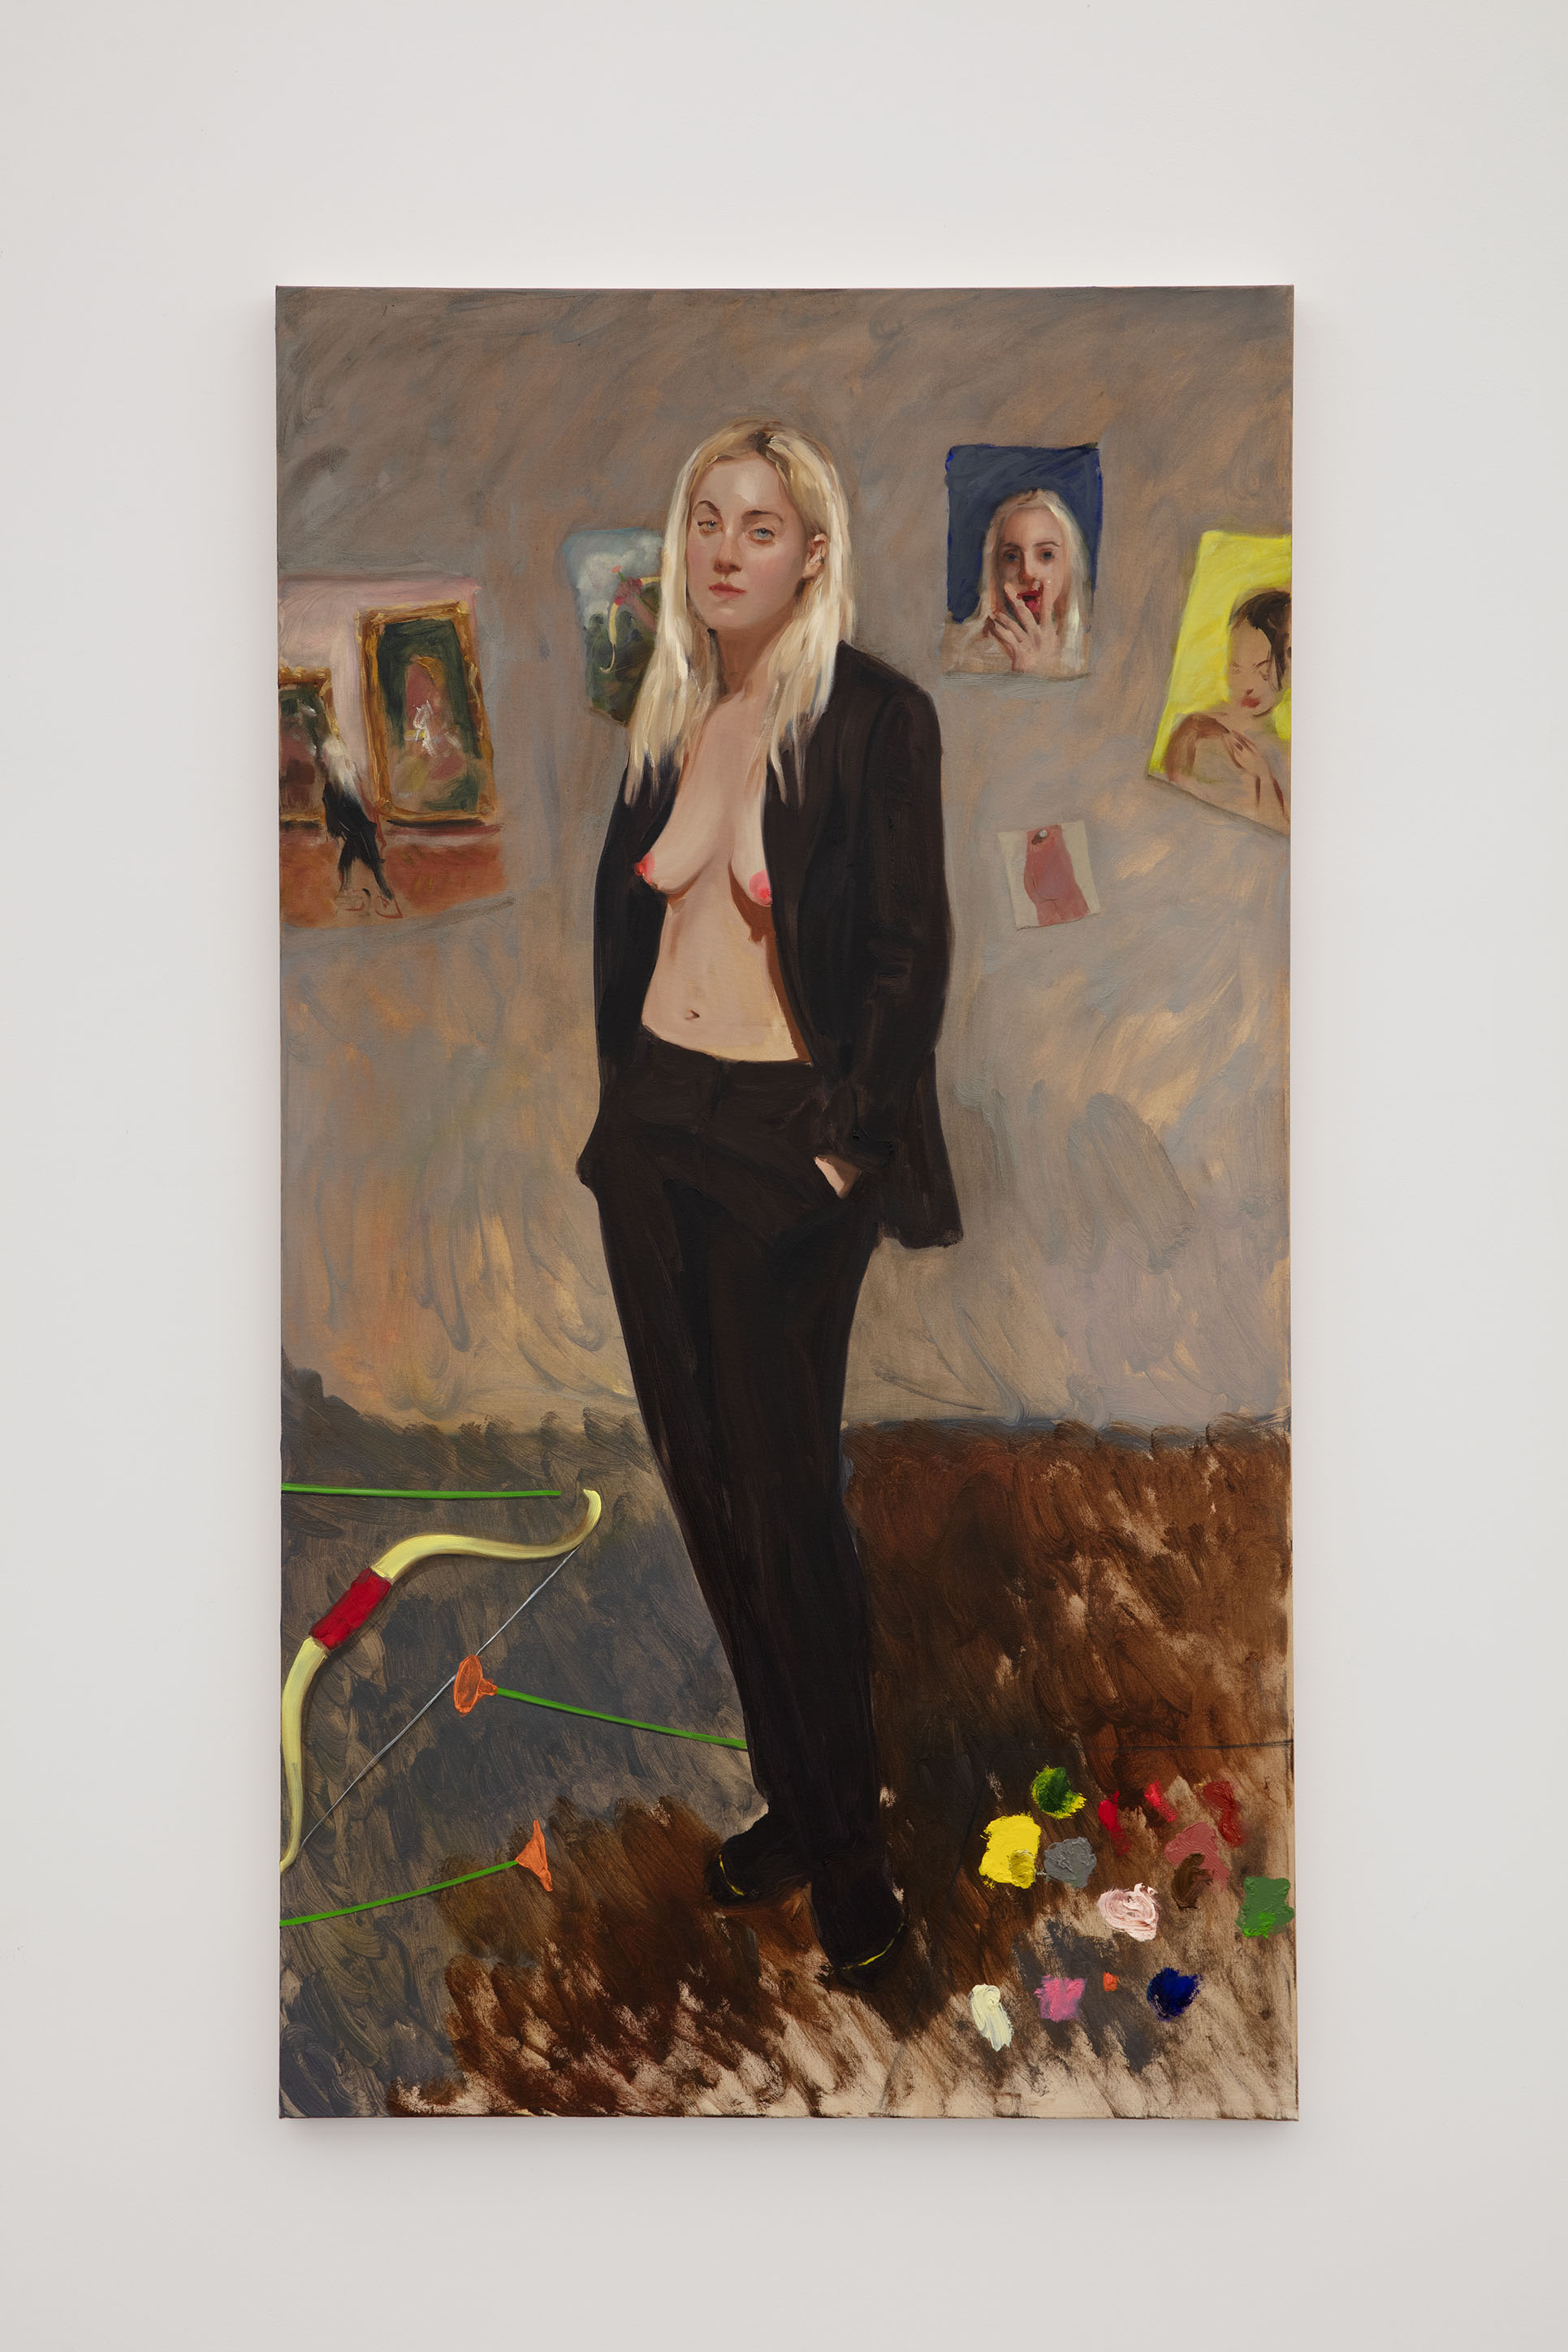 Jenna Gribbon. "Watching me paint", 2019. Oil on linen. 183 x 102 cm 